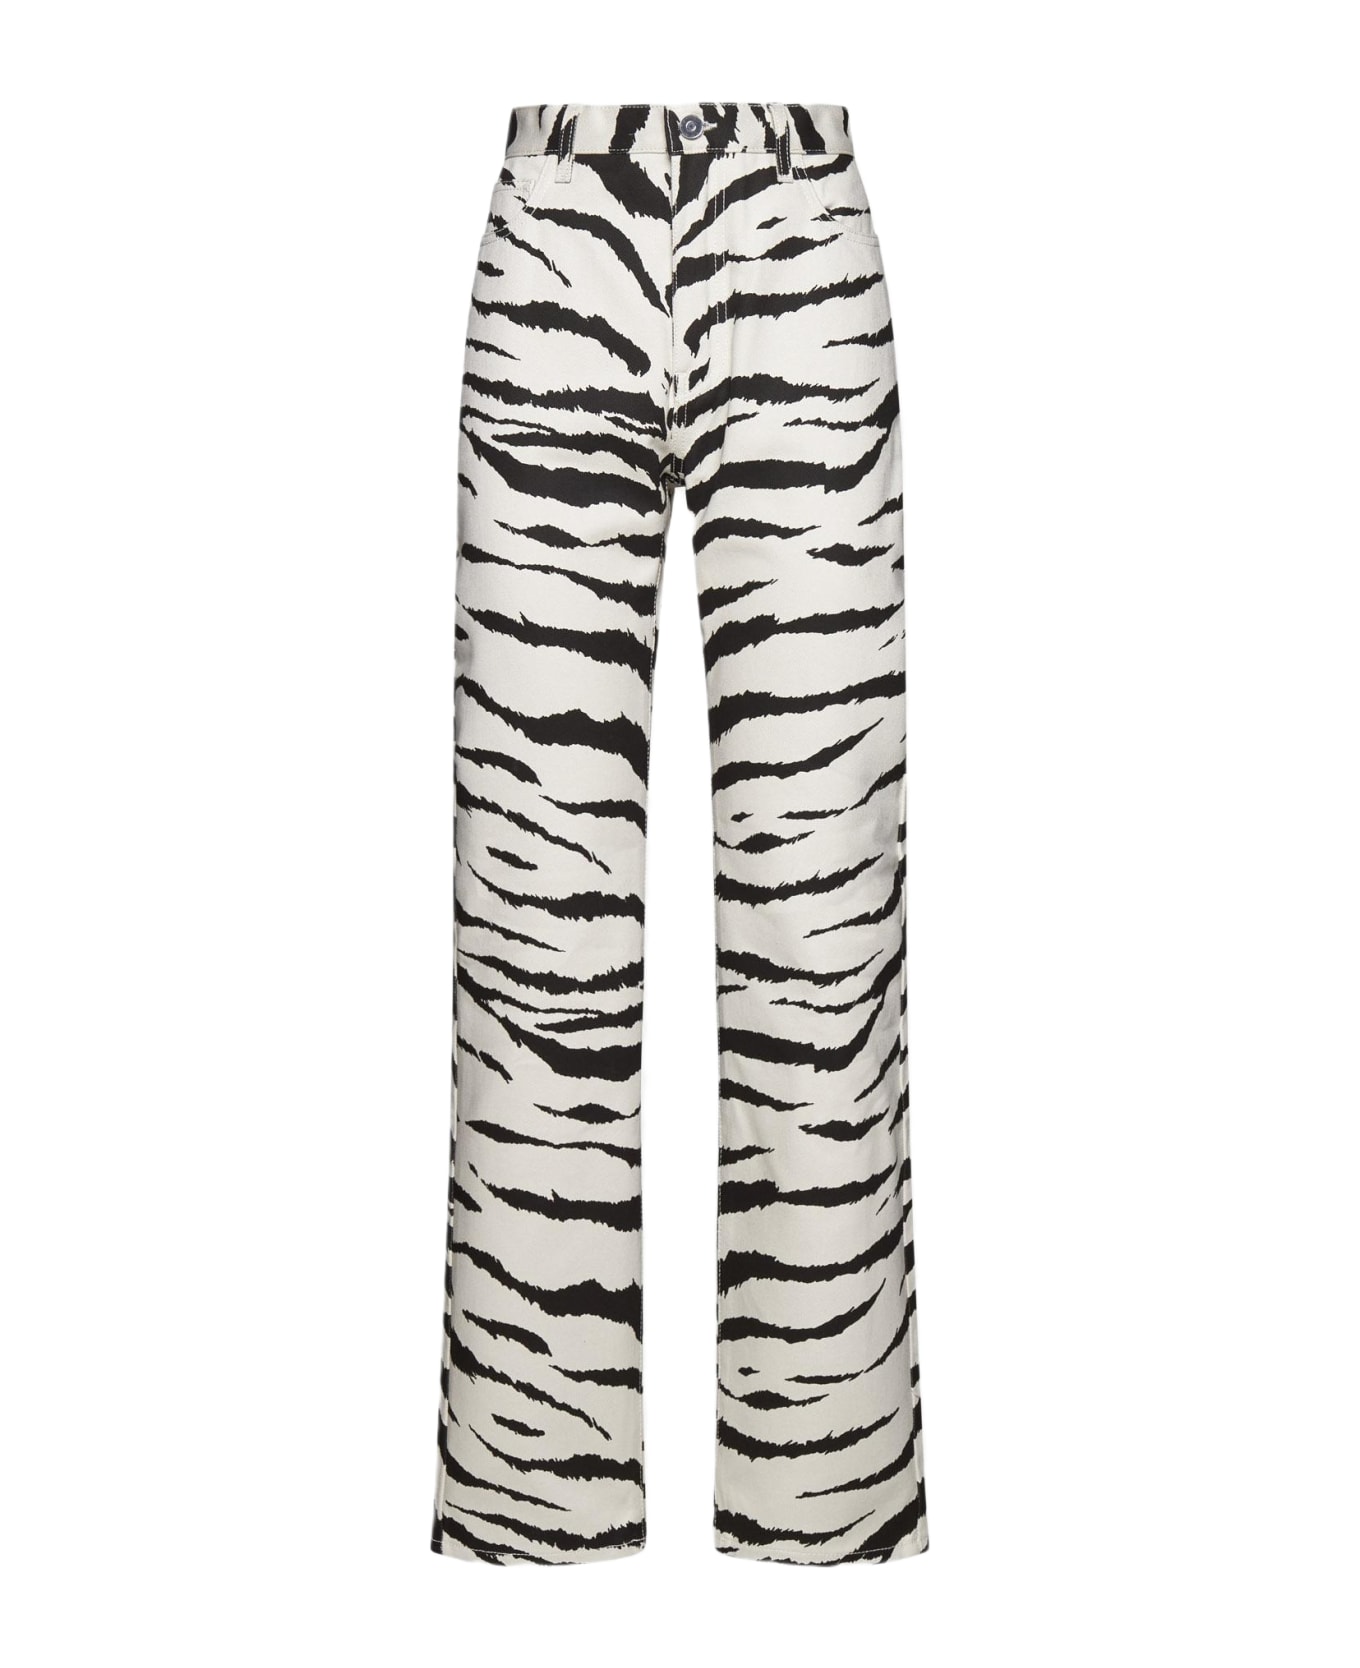 Alaia Zebra Print Jeans - Zebra